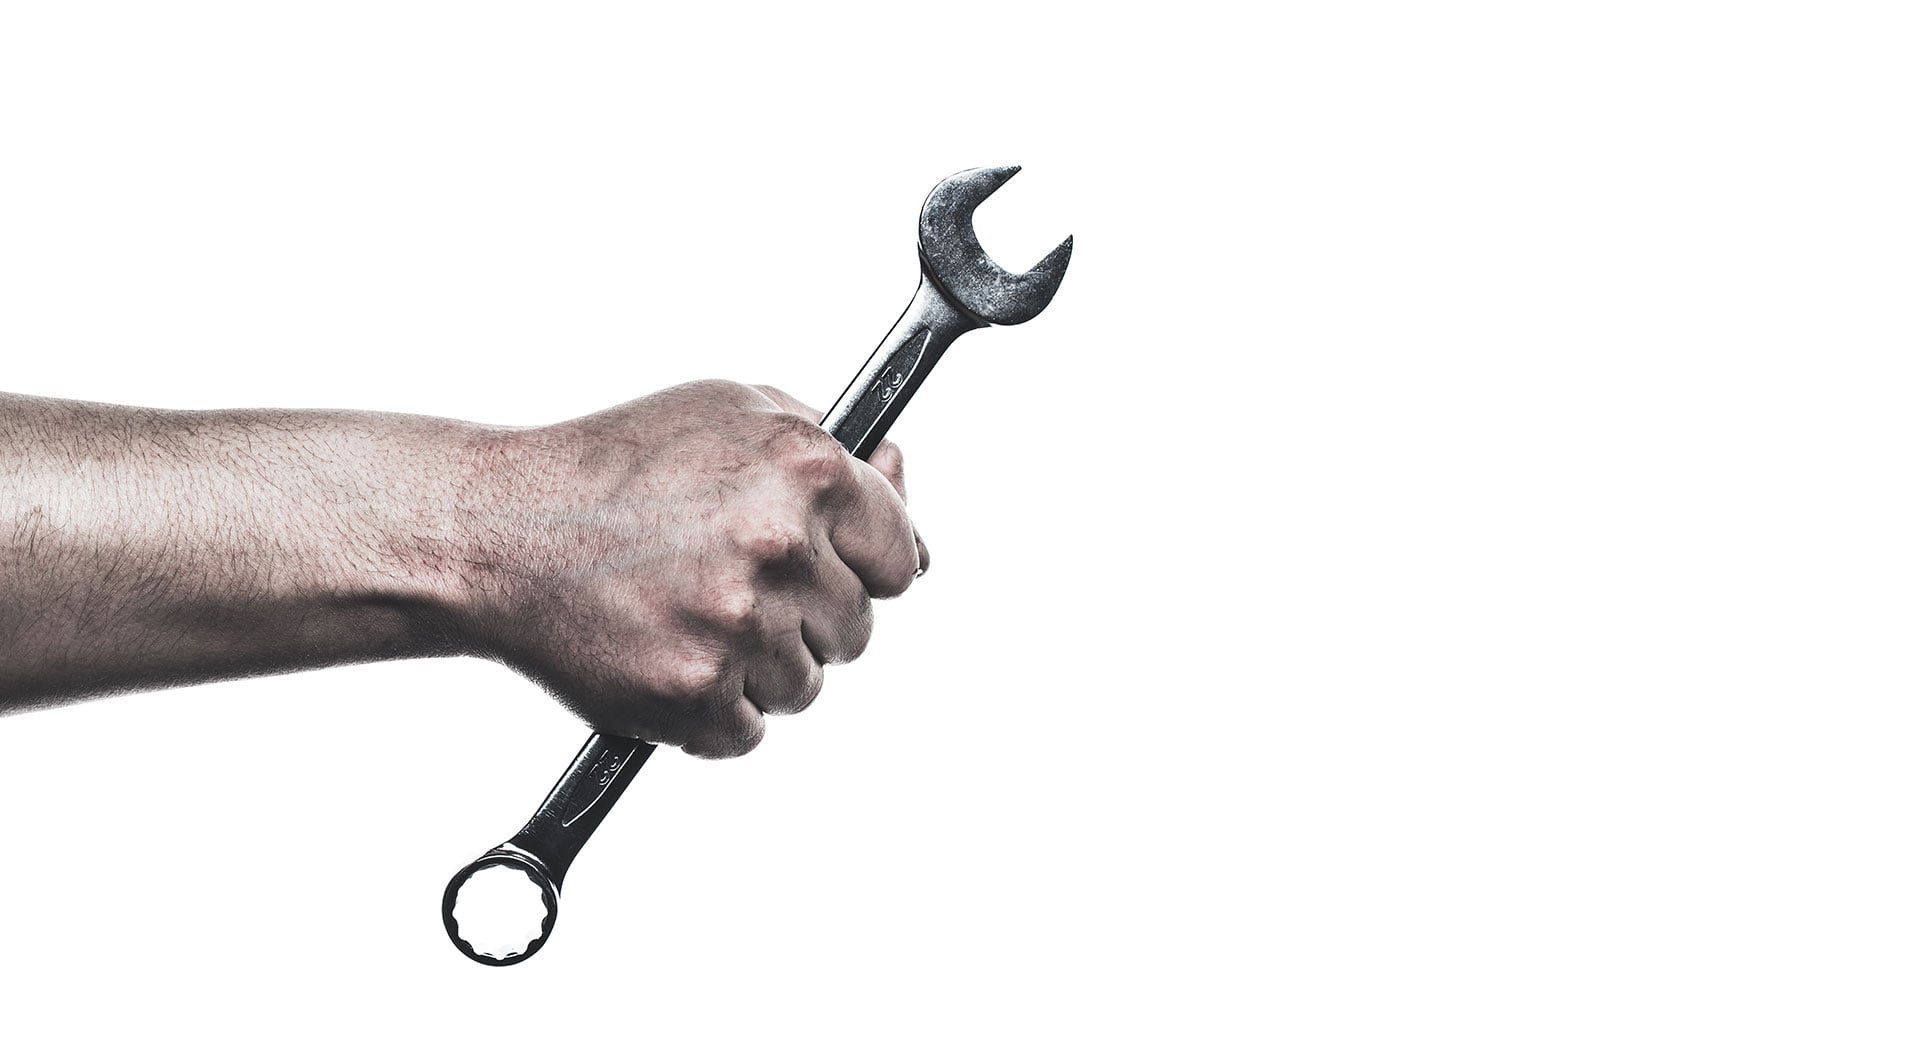 Guest tools. Гаечный ключ в руке. Руки с инструментами. Инструмент ключ рука. Мужчина с гаечным ключом в руках.